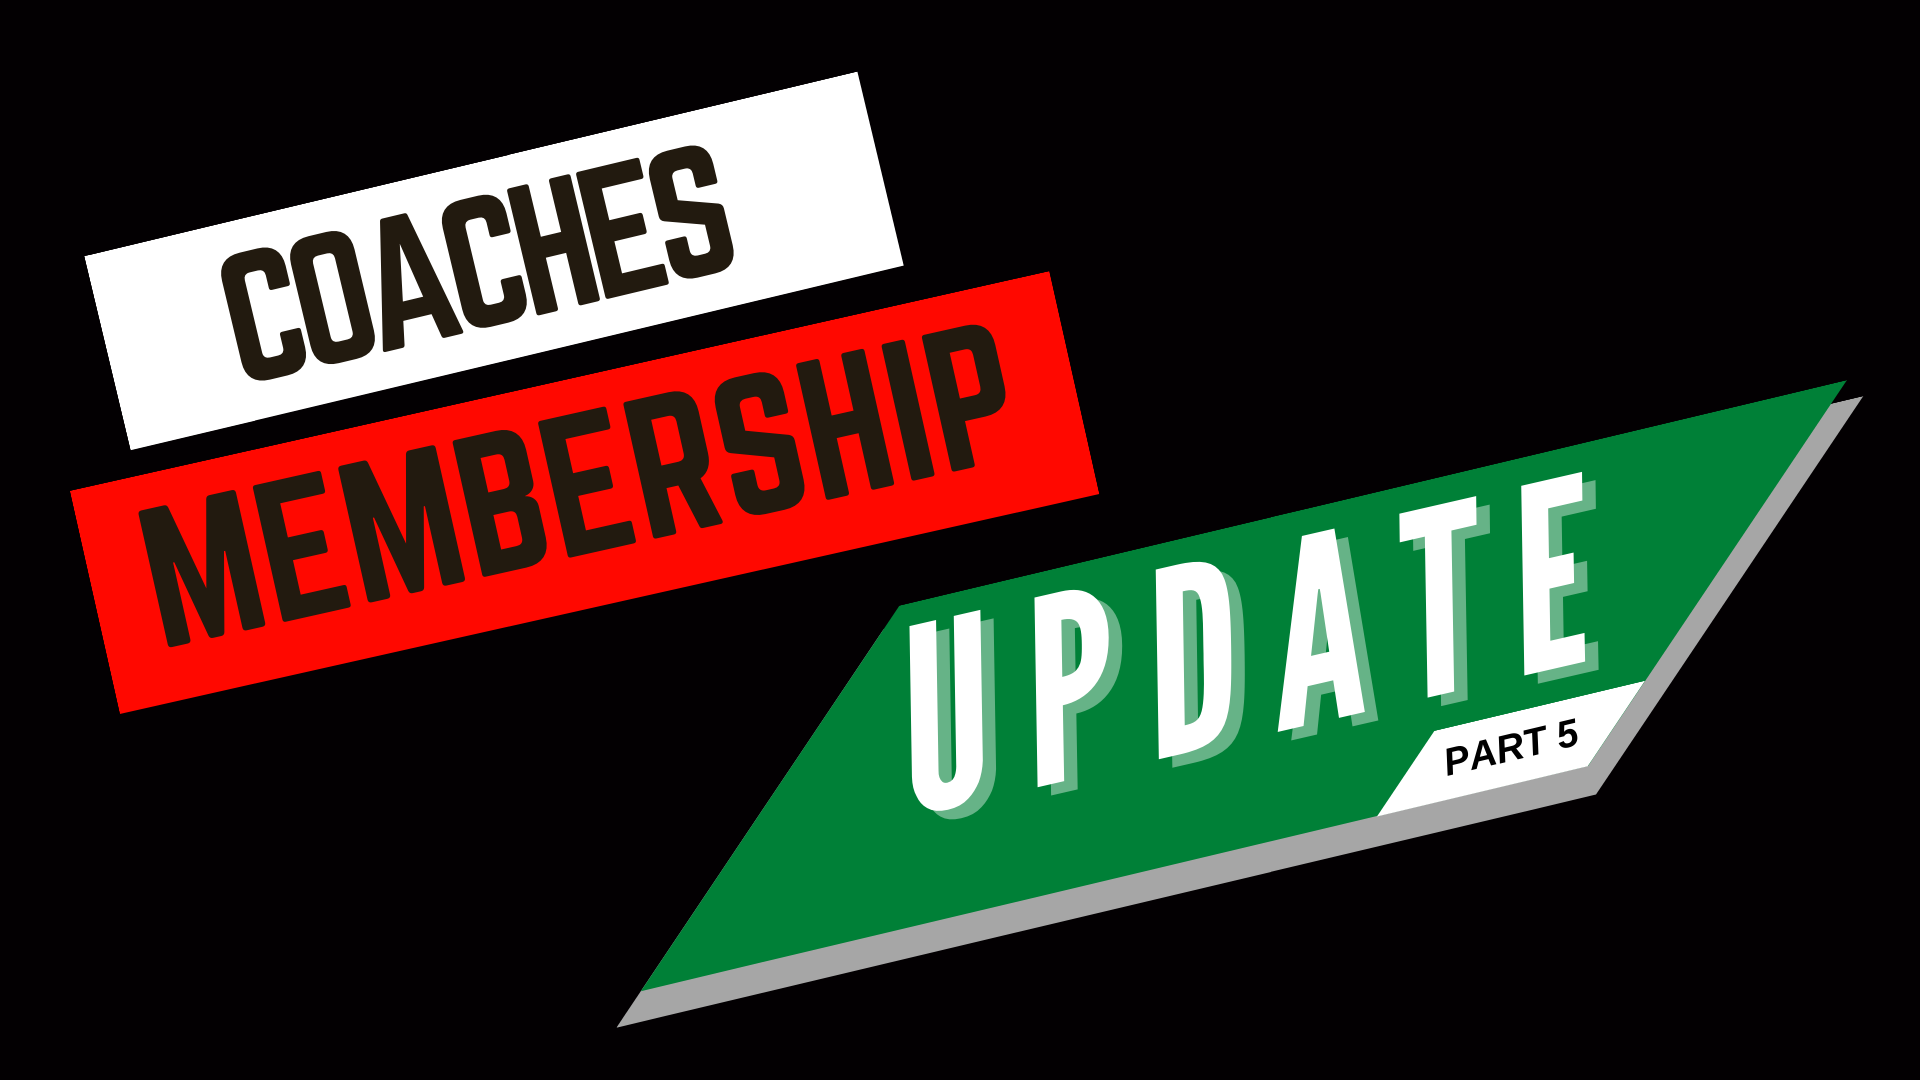 Coaches Membership Update Part 5